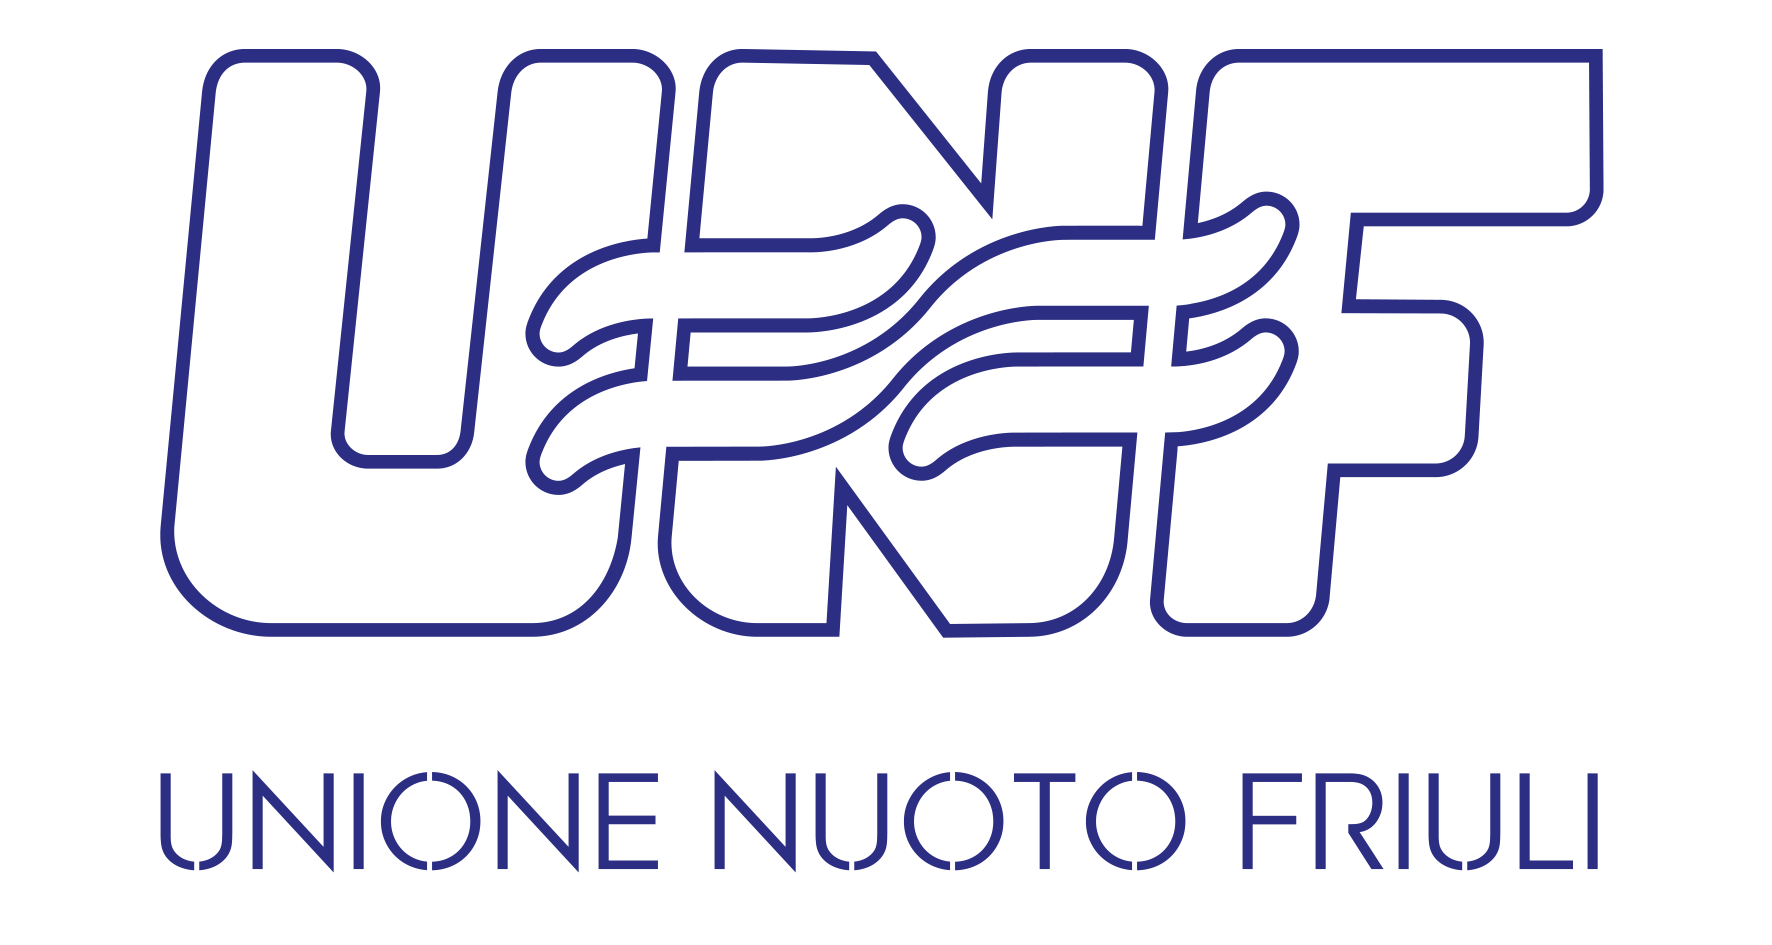 UNF logo